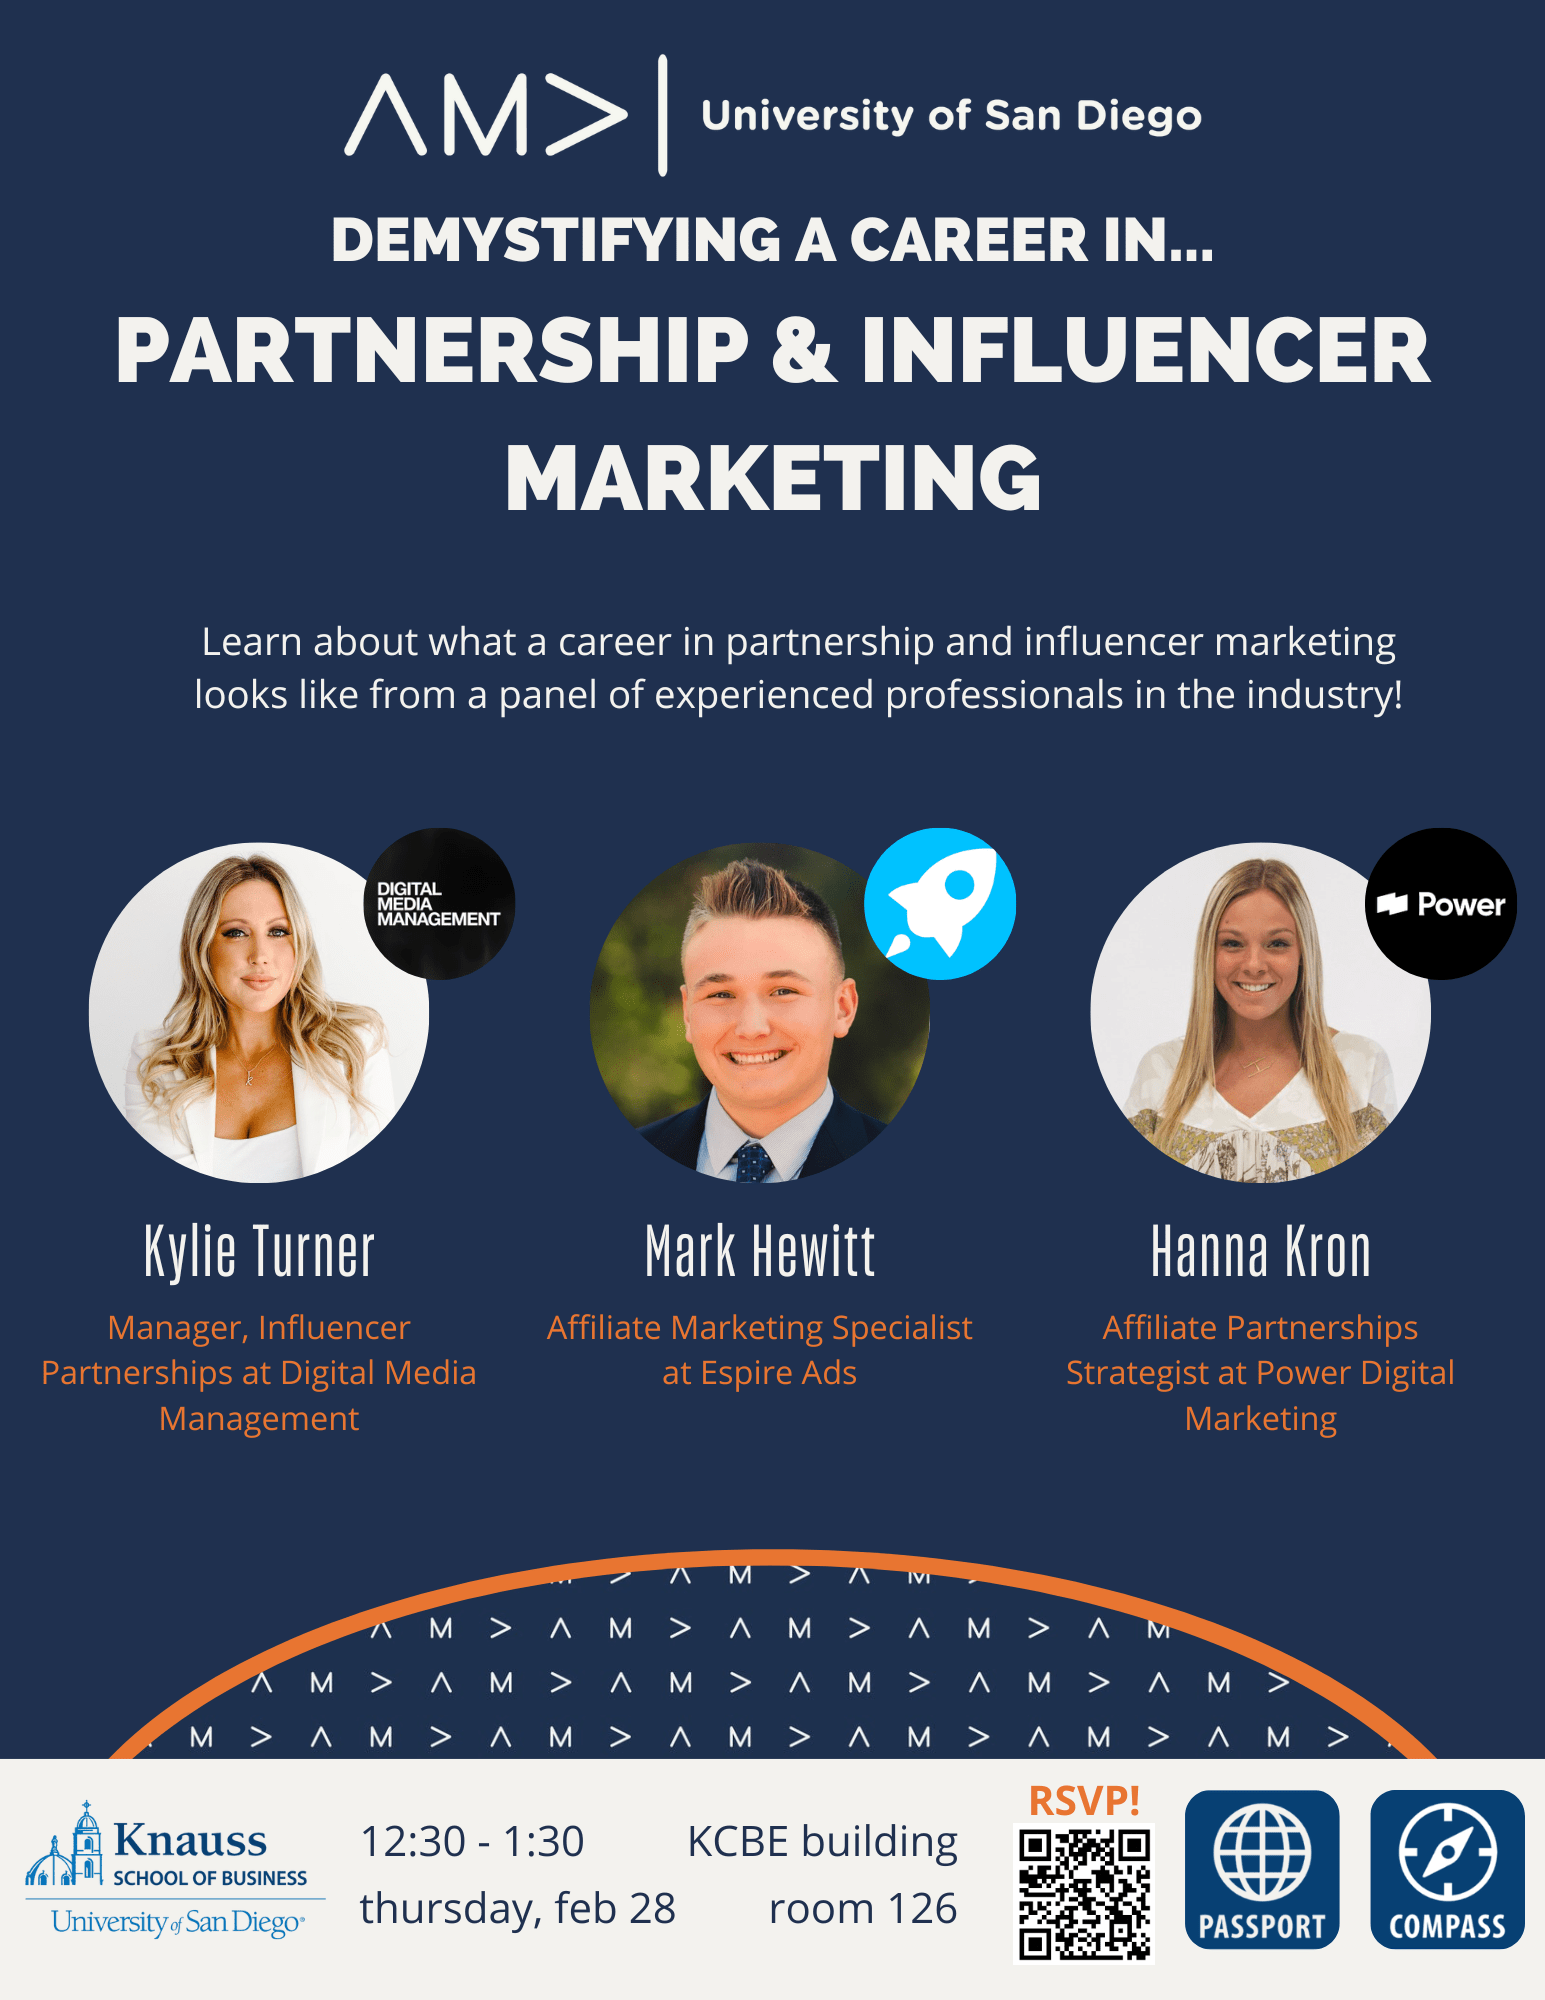 Partnership & Influencer Marketing